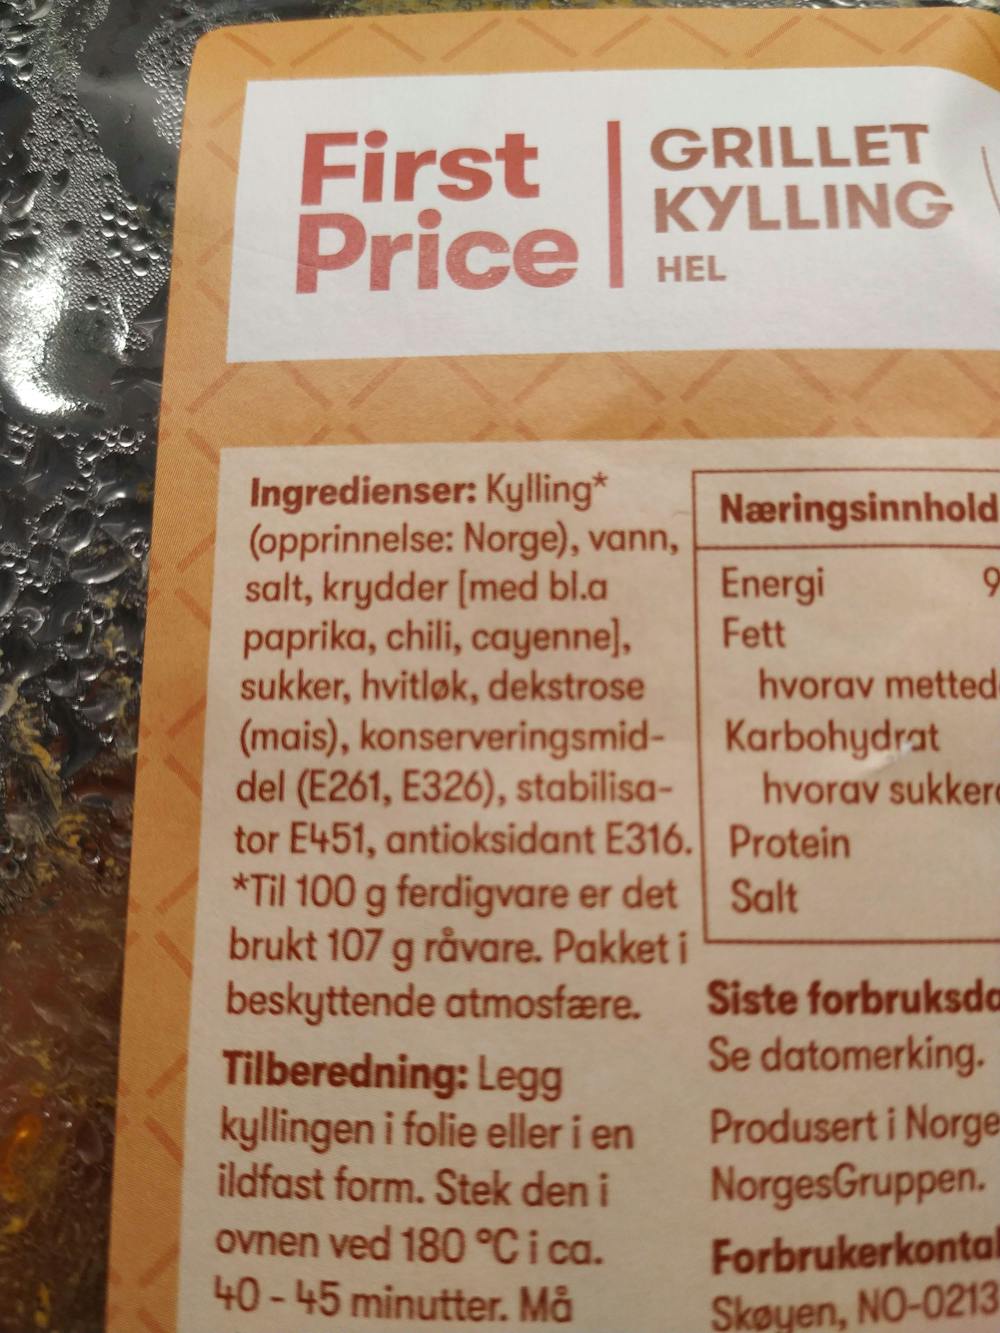 Ingredienslisten til Grillet kylling, First price